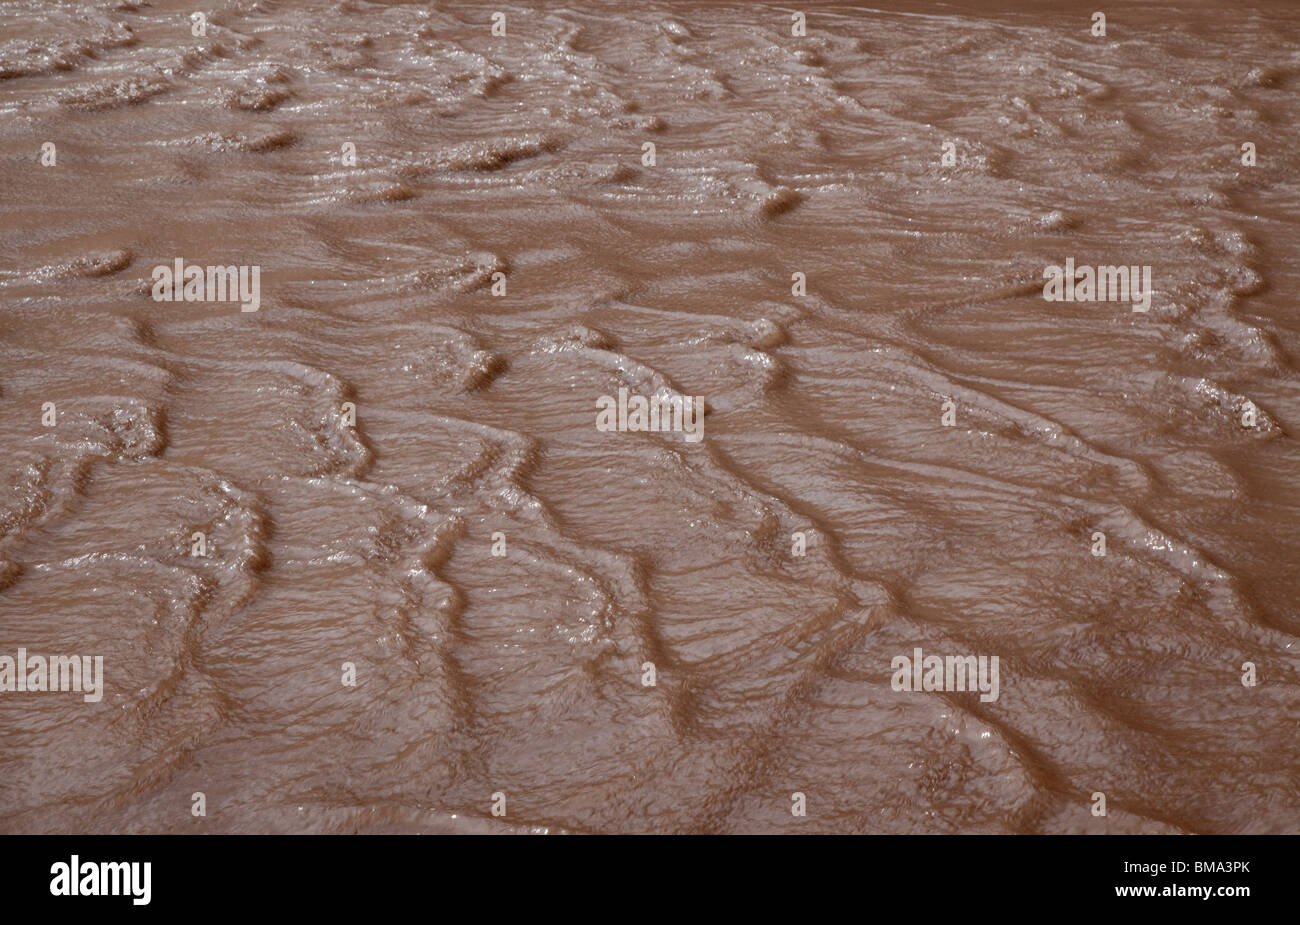 antidunes in Medano Creek, Great Sand Dunes National Park, Colorado Stock Photo